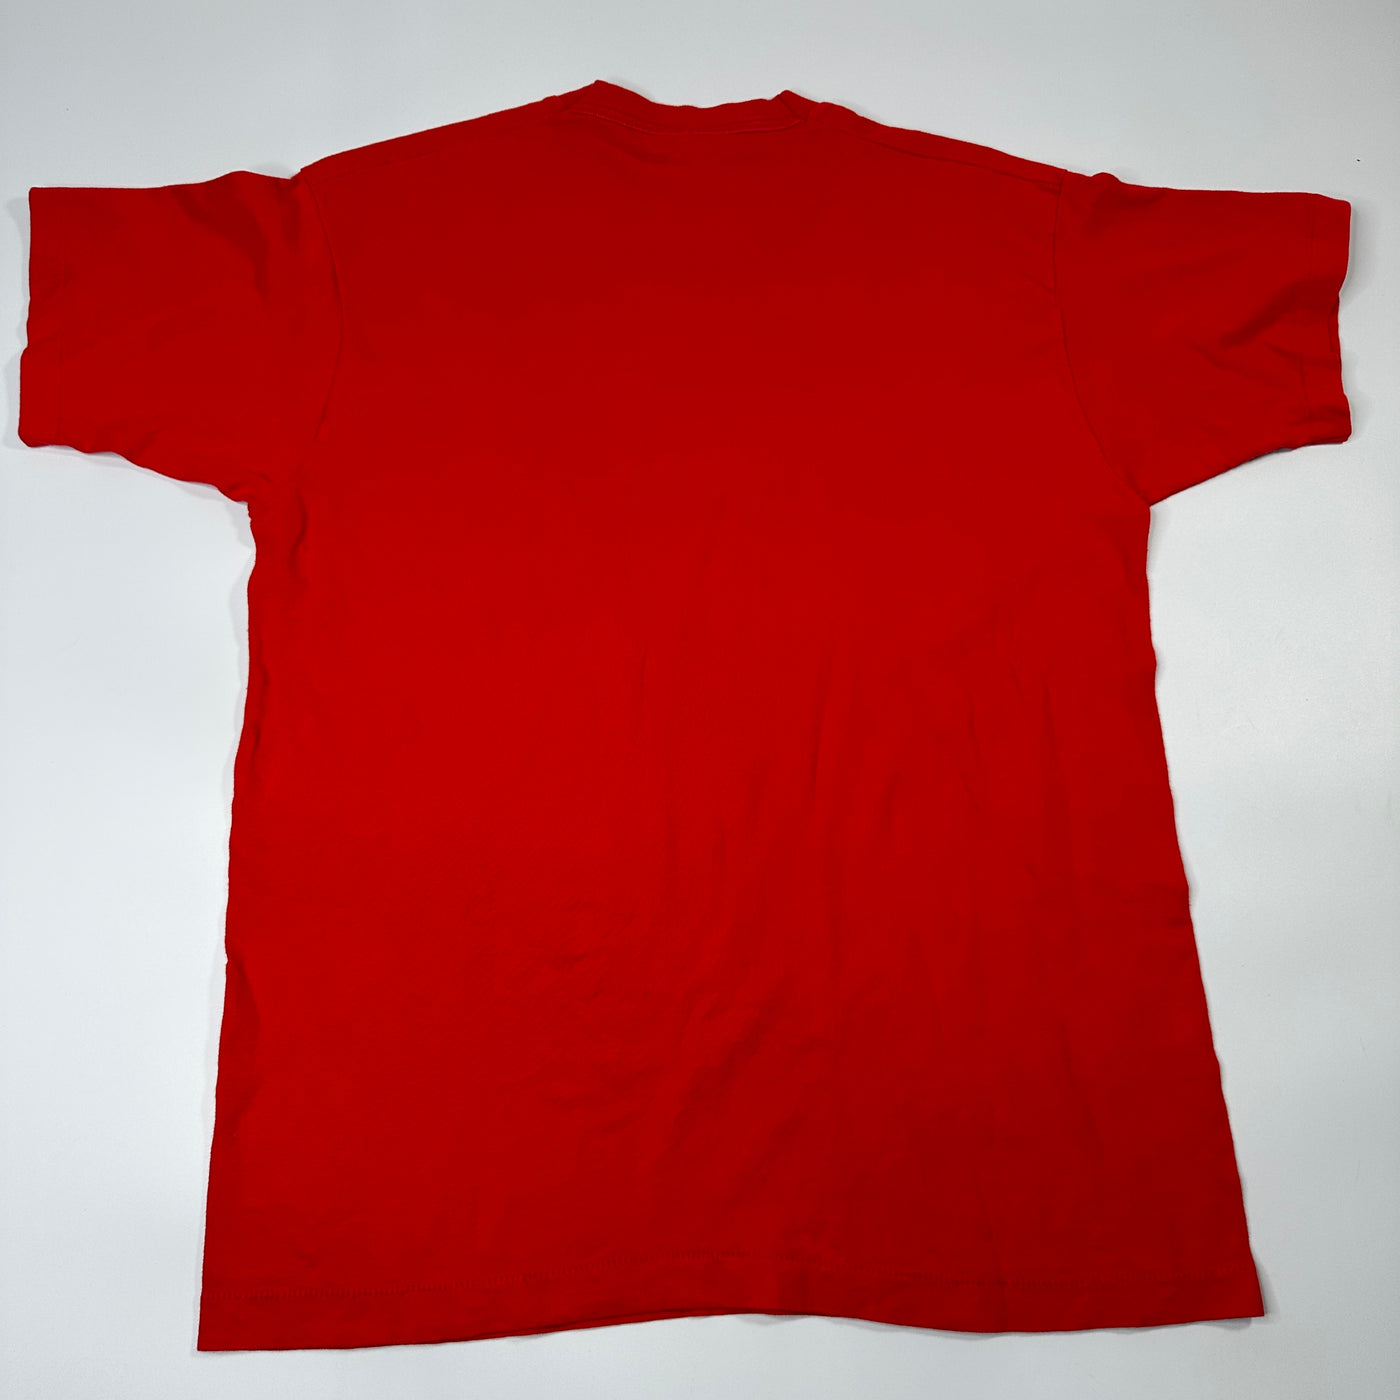 1996 Kansas City Chiefs Red Sports T-shirt sz L